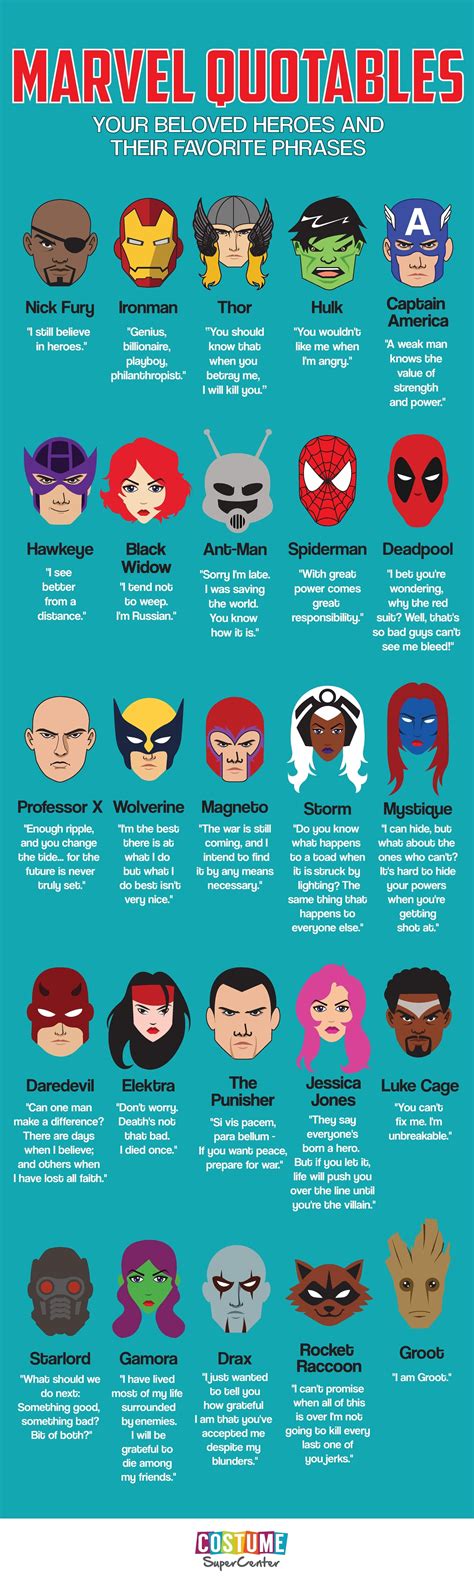 Marvel Quotables Infographic Costume Supercenter Blog Marvel